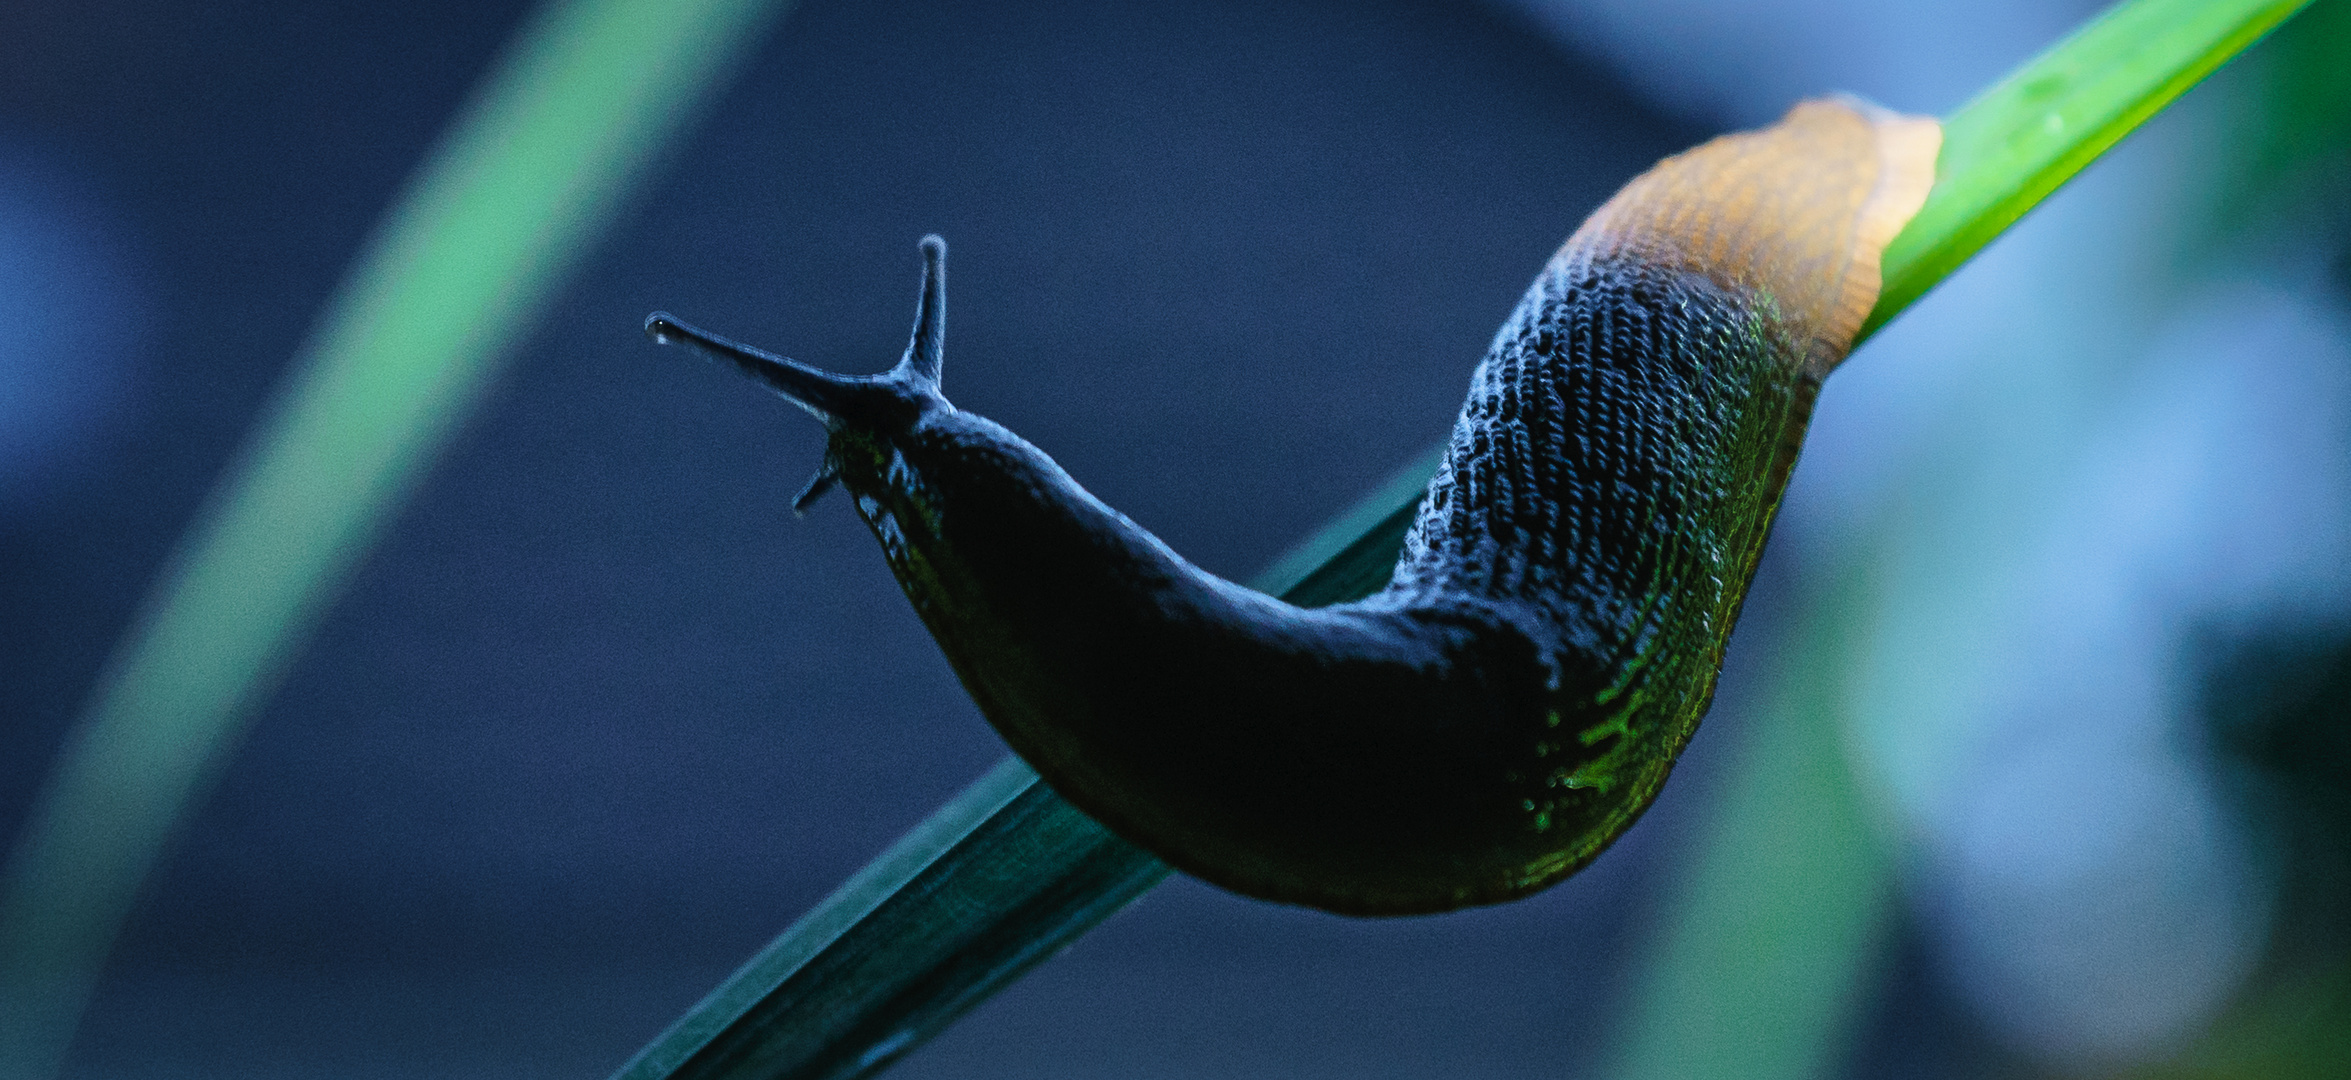 slug with tail light